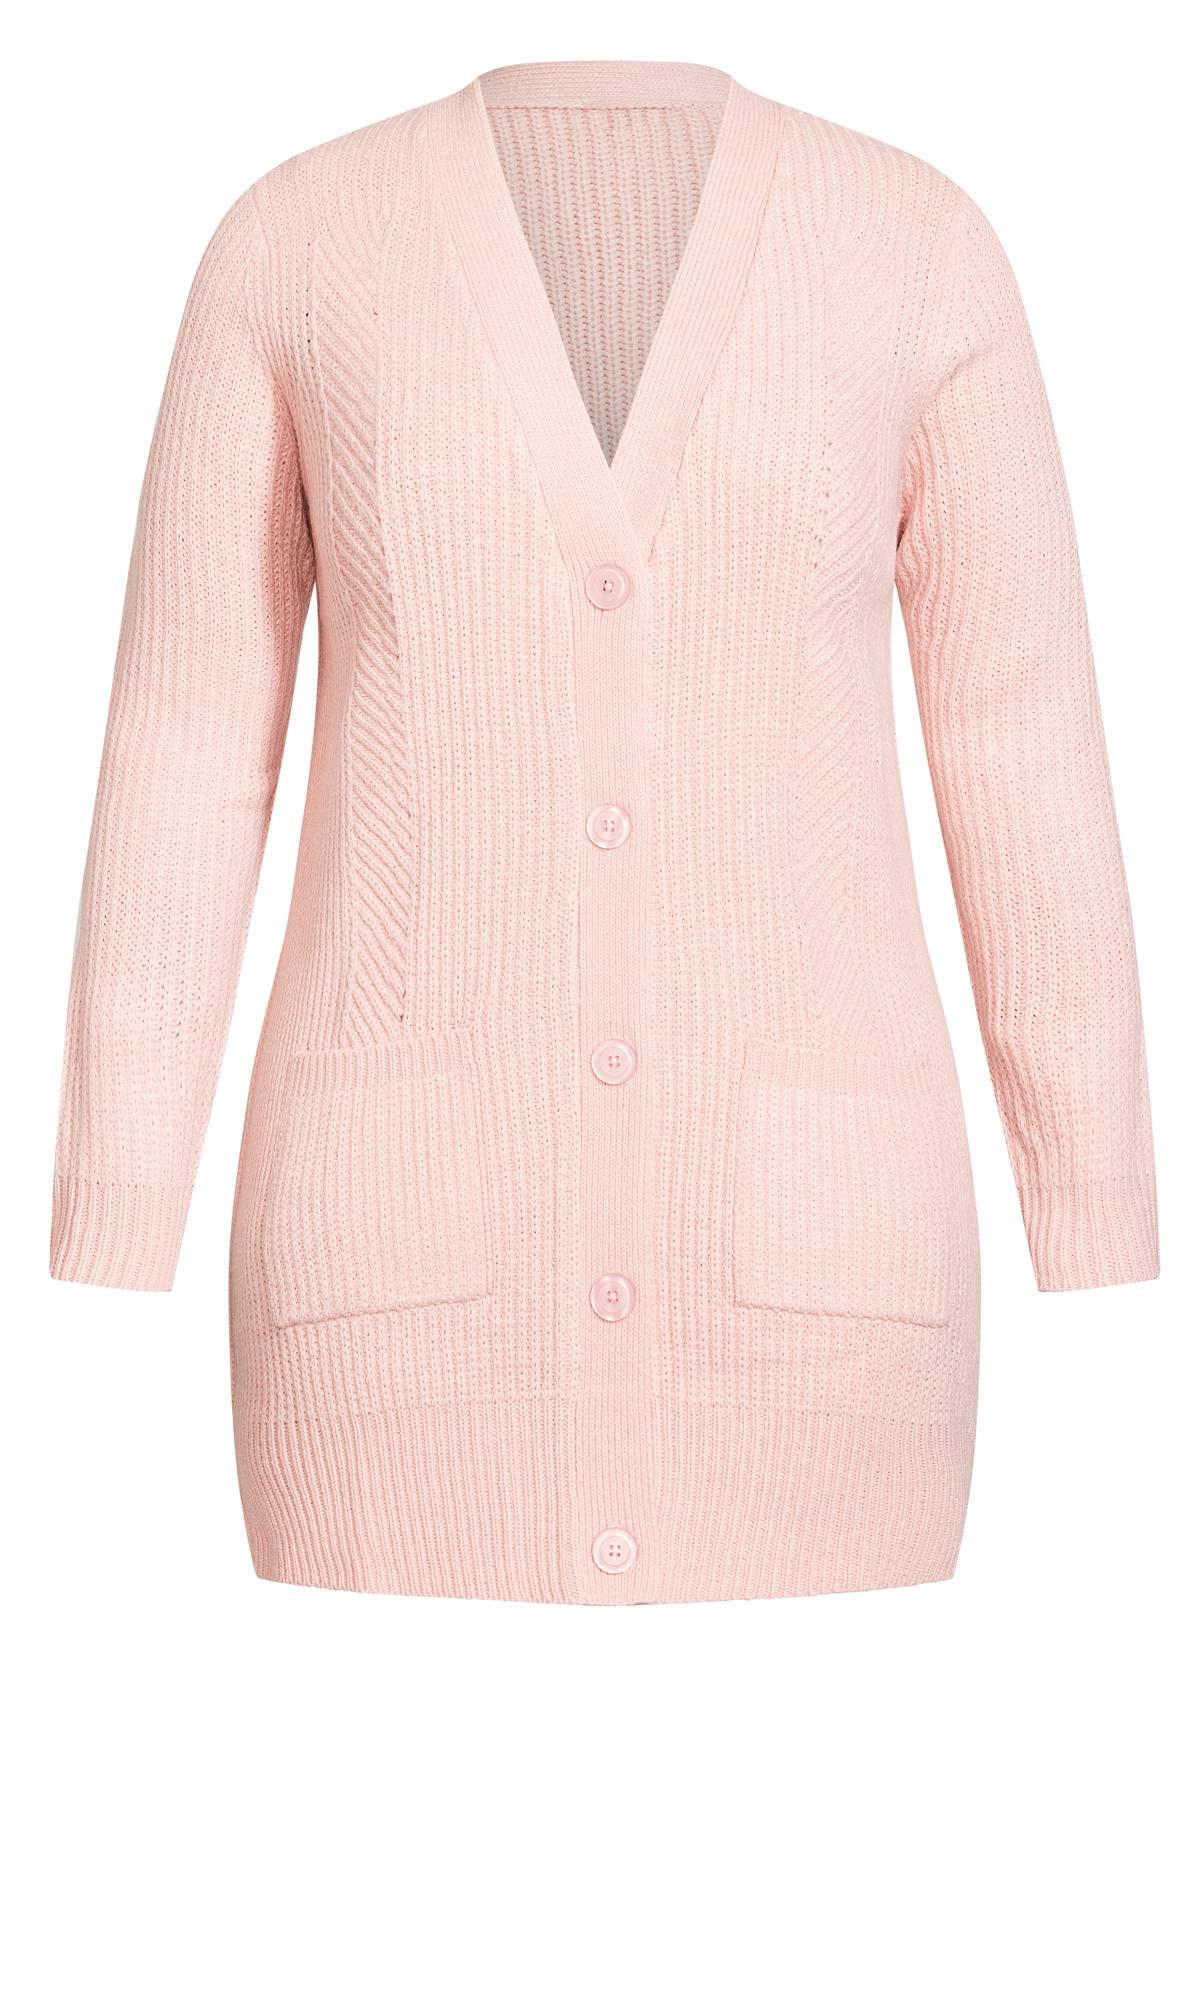 Evans Light Pink Button Through Knitted Cardigan | Evans 2